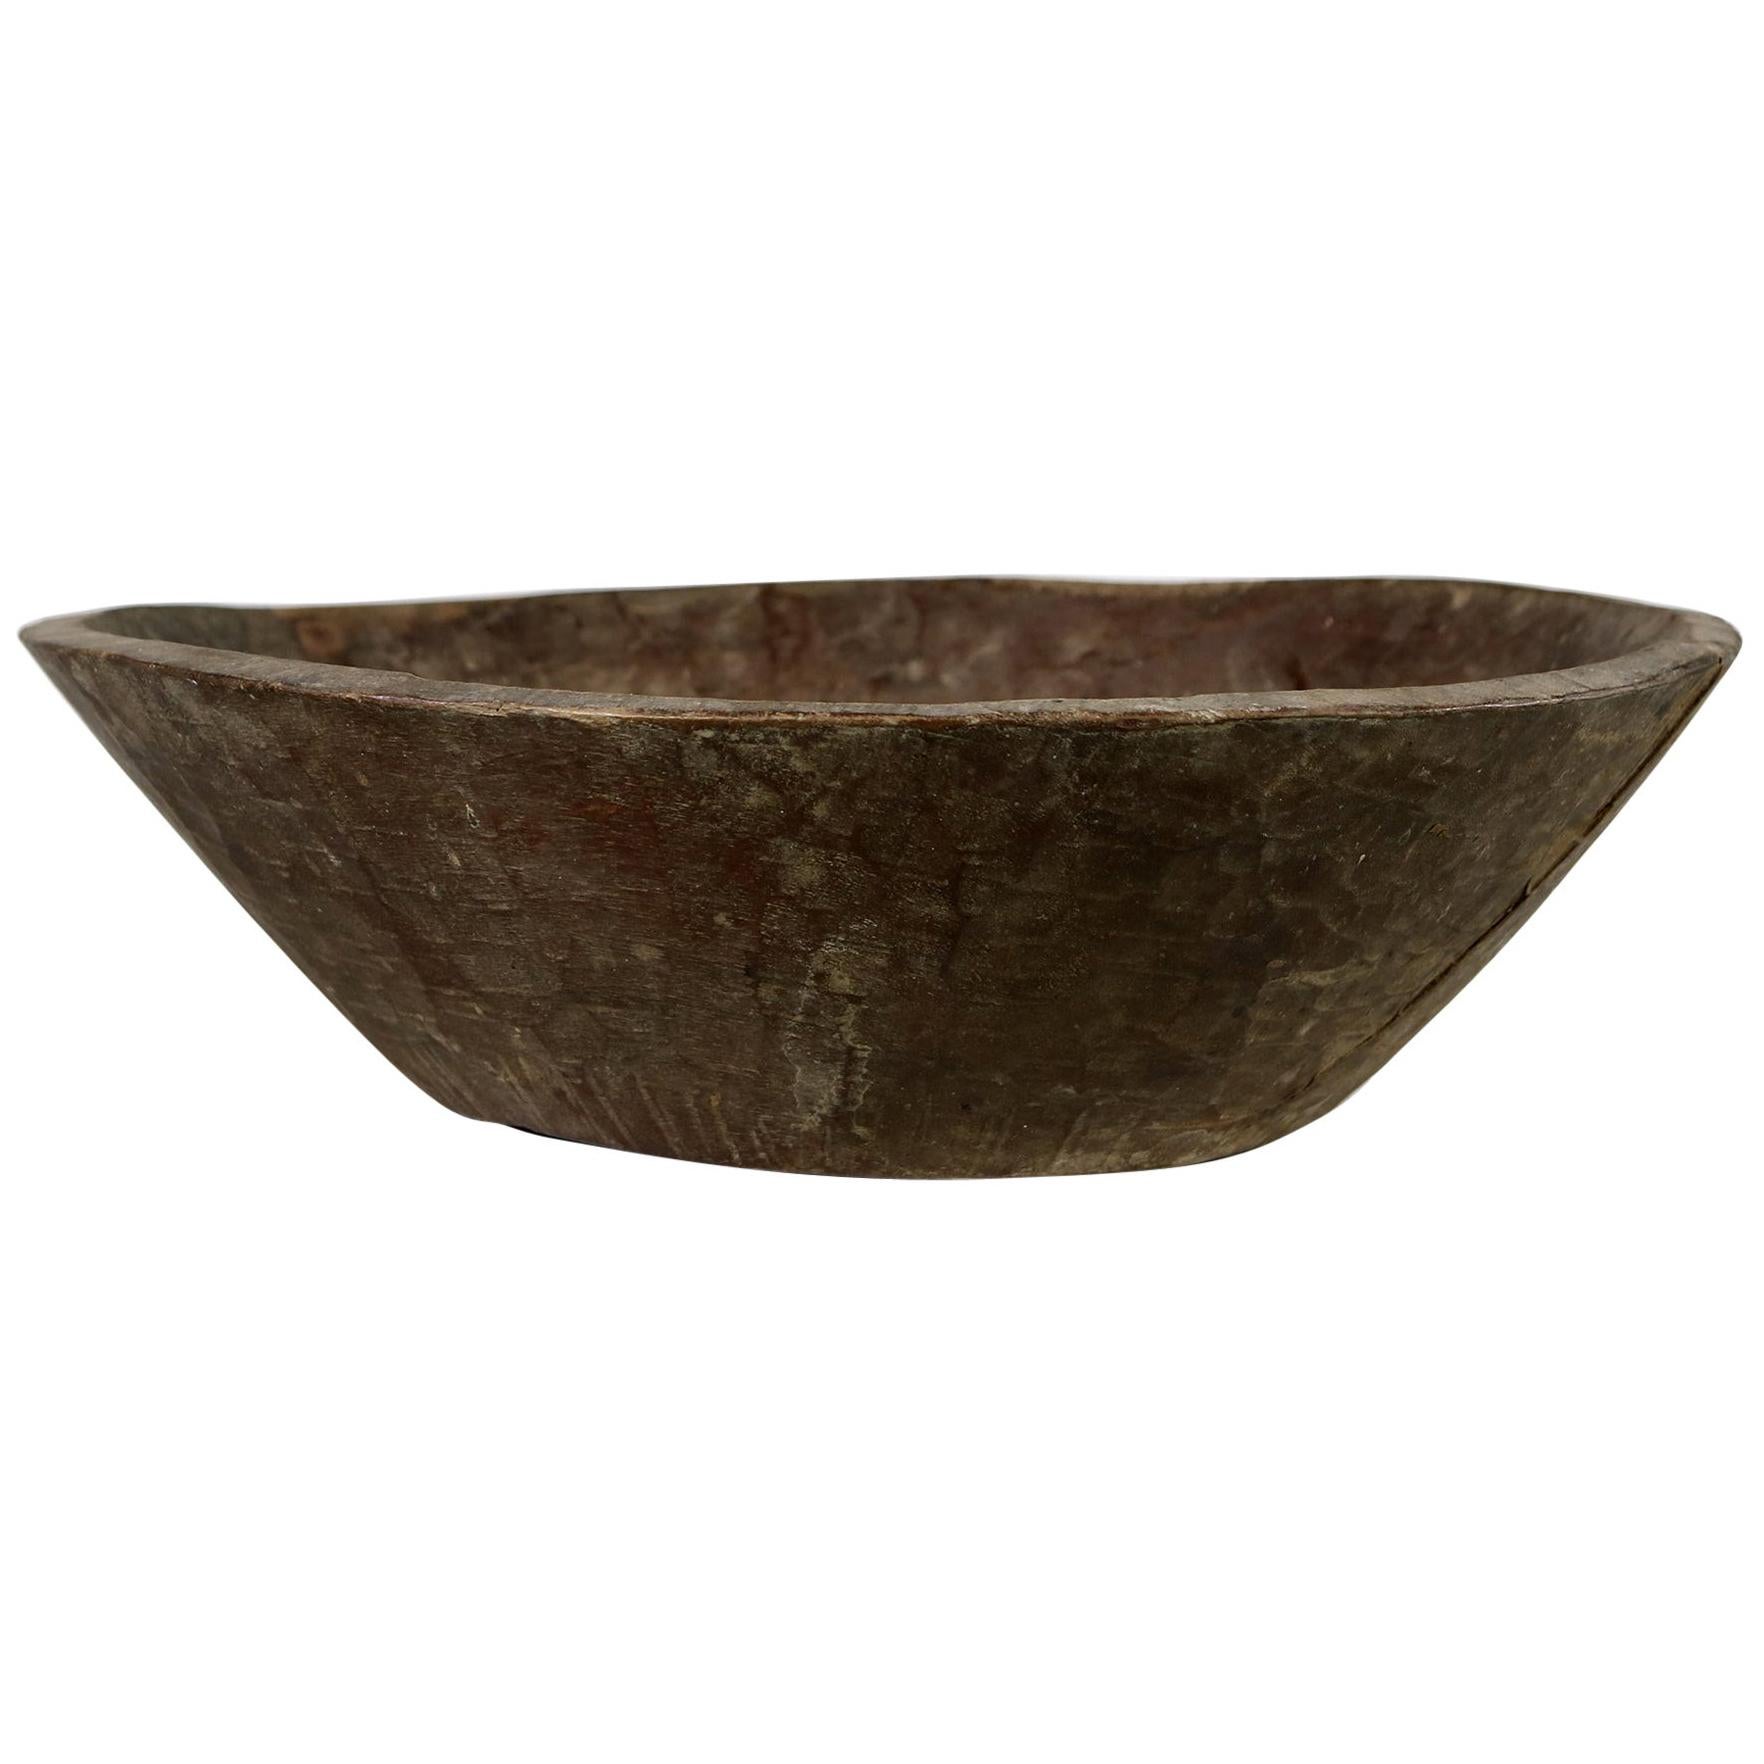 Antique Indian Naga Bowl, Old Solid Wood, Natural Rustic, Wabisabi